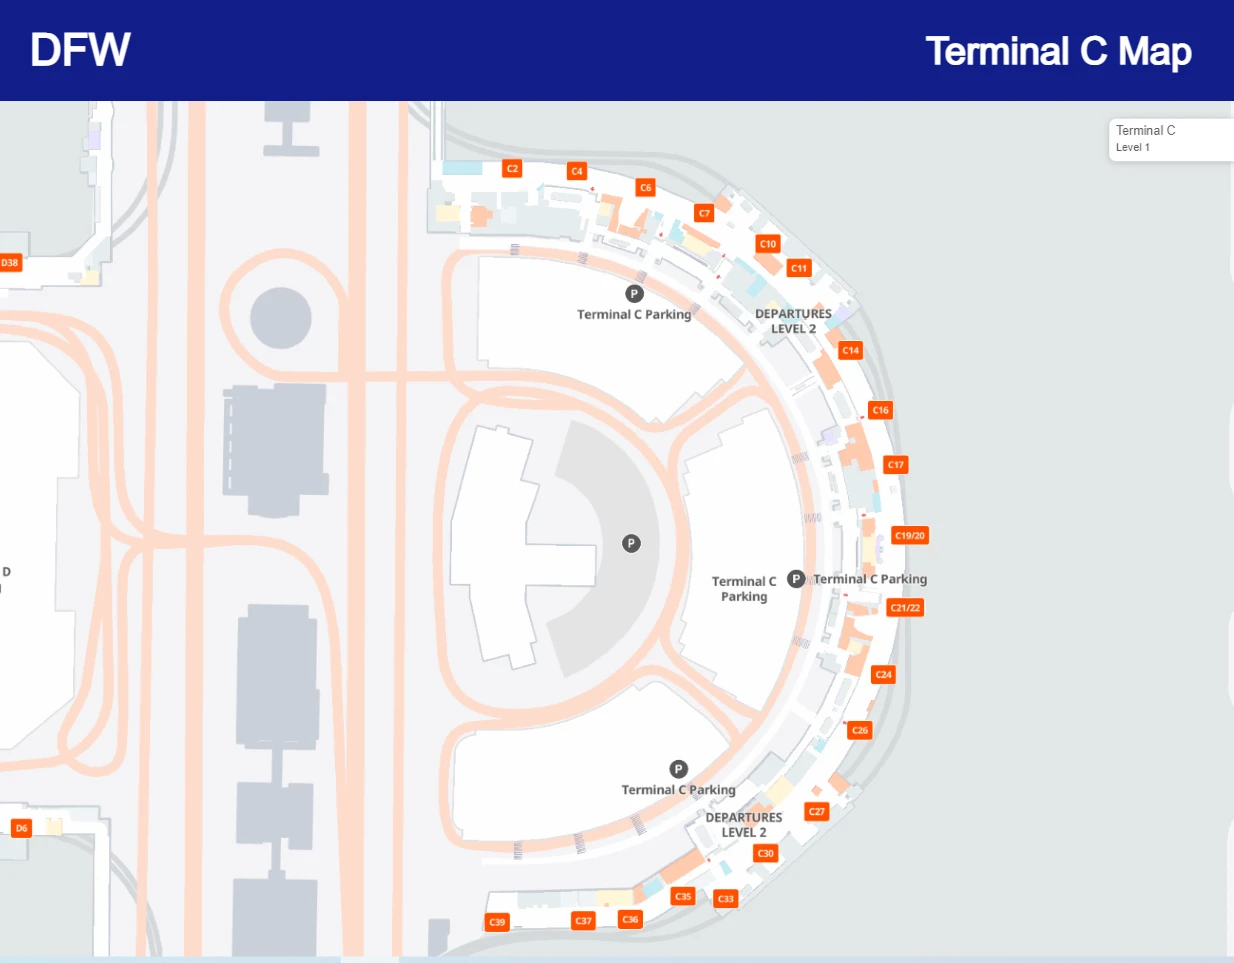 DFW Terminal C Airport Map